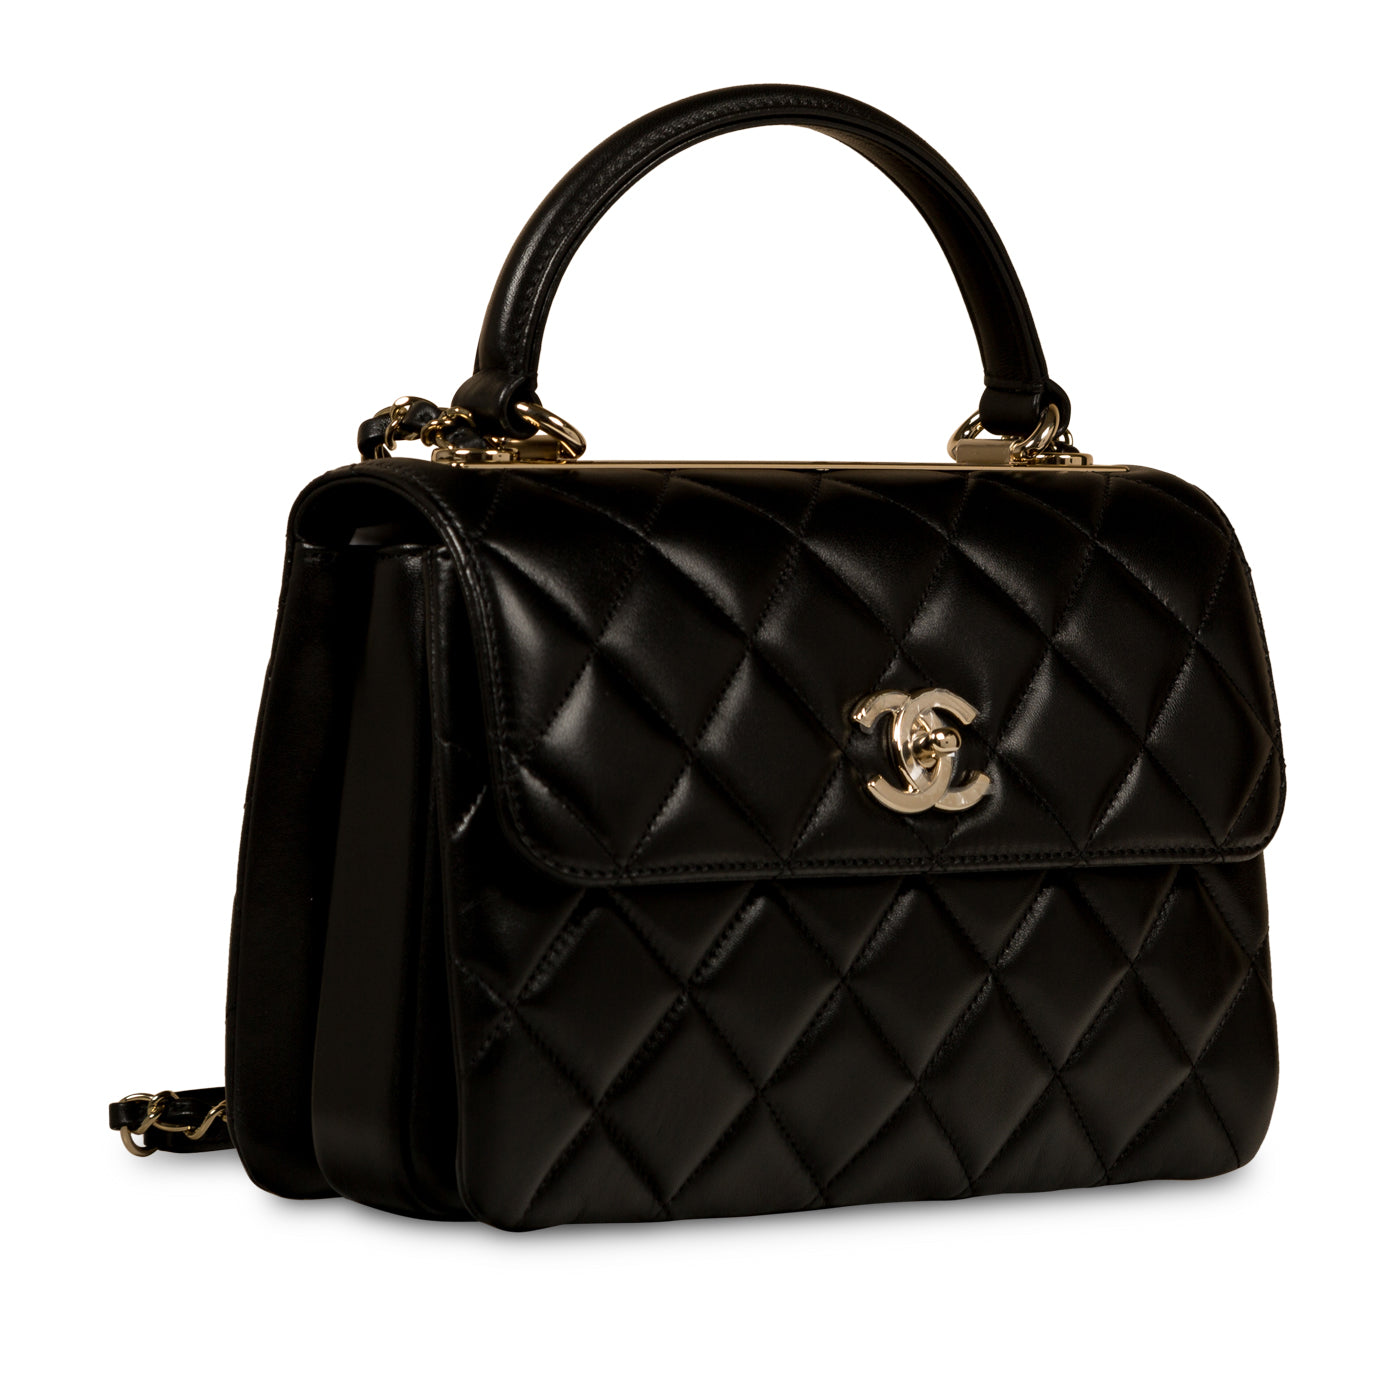 Chanel - Small Trendy CC Flap Bag - Brand New - Champagne Gold Hardware -  Black Lambskin